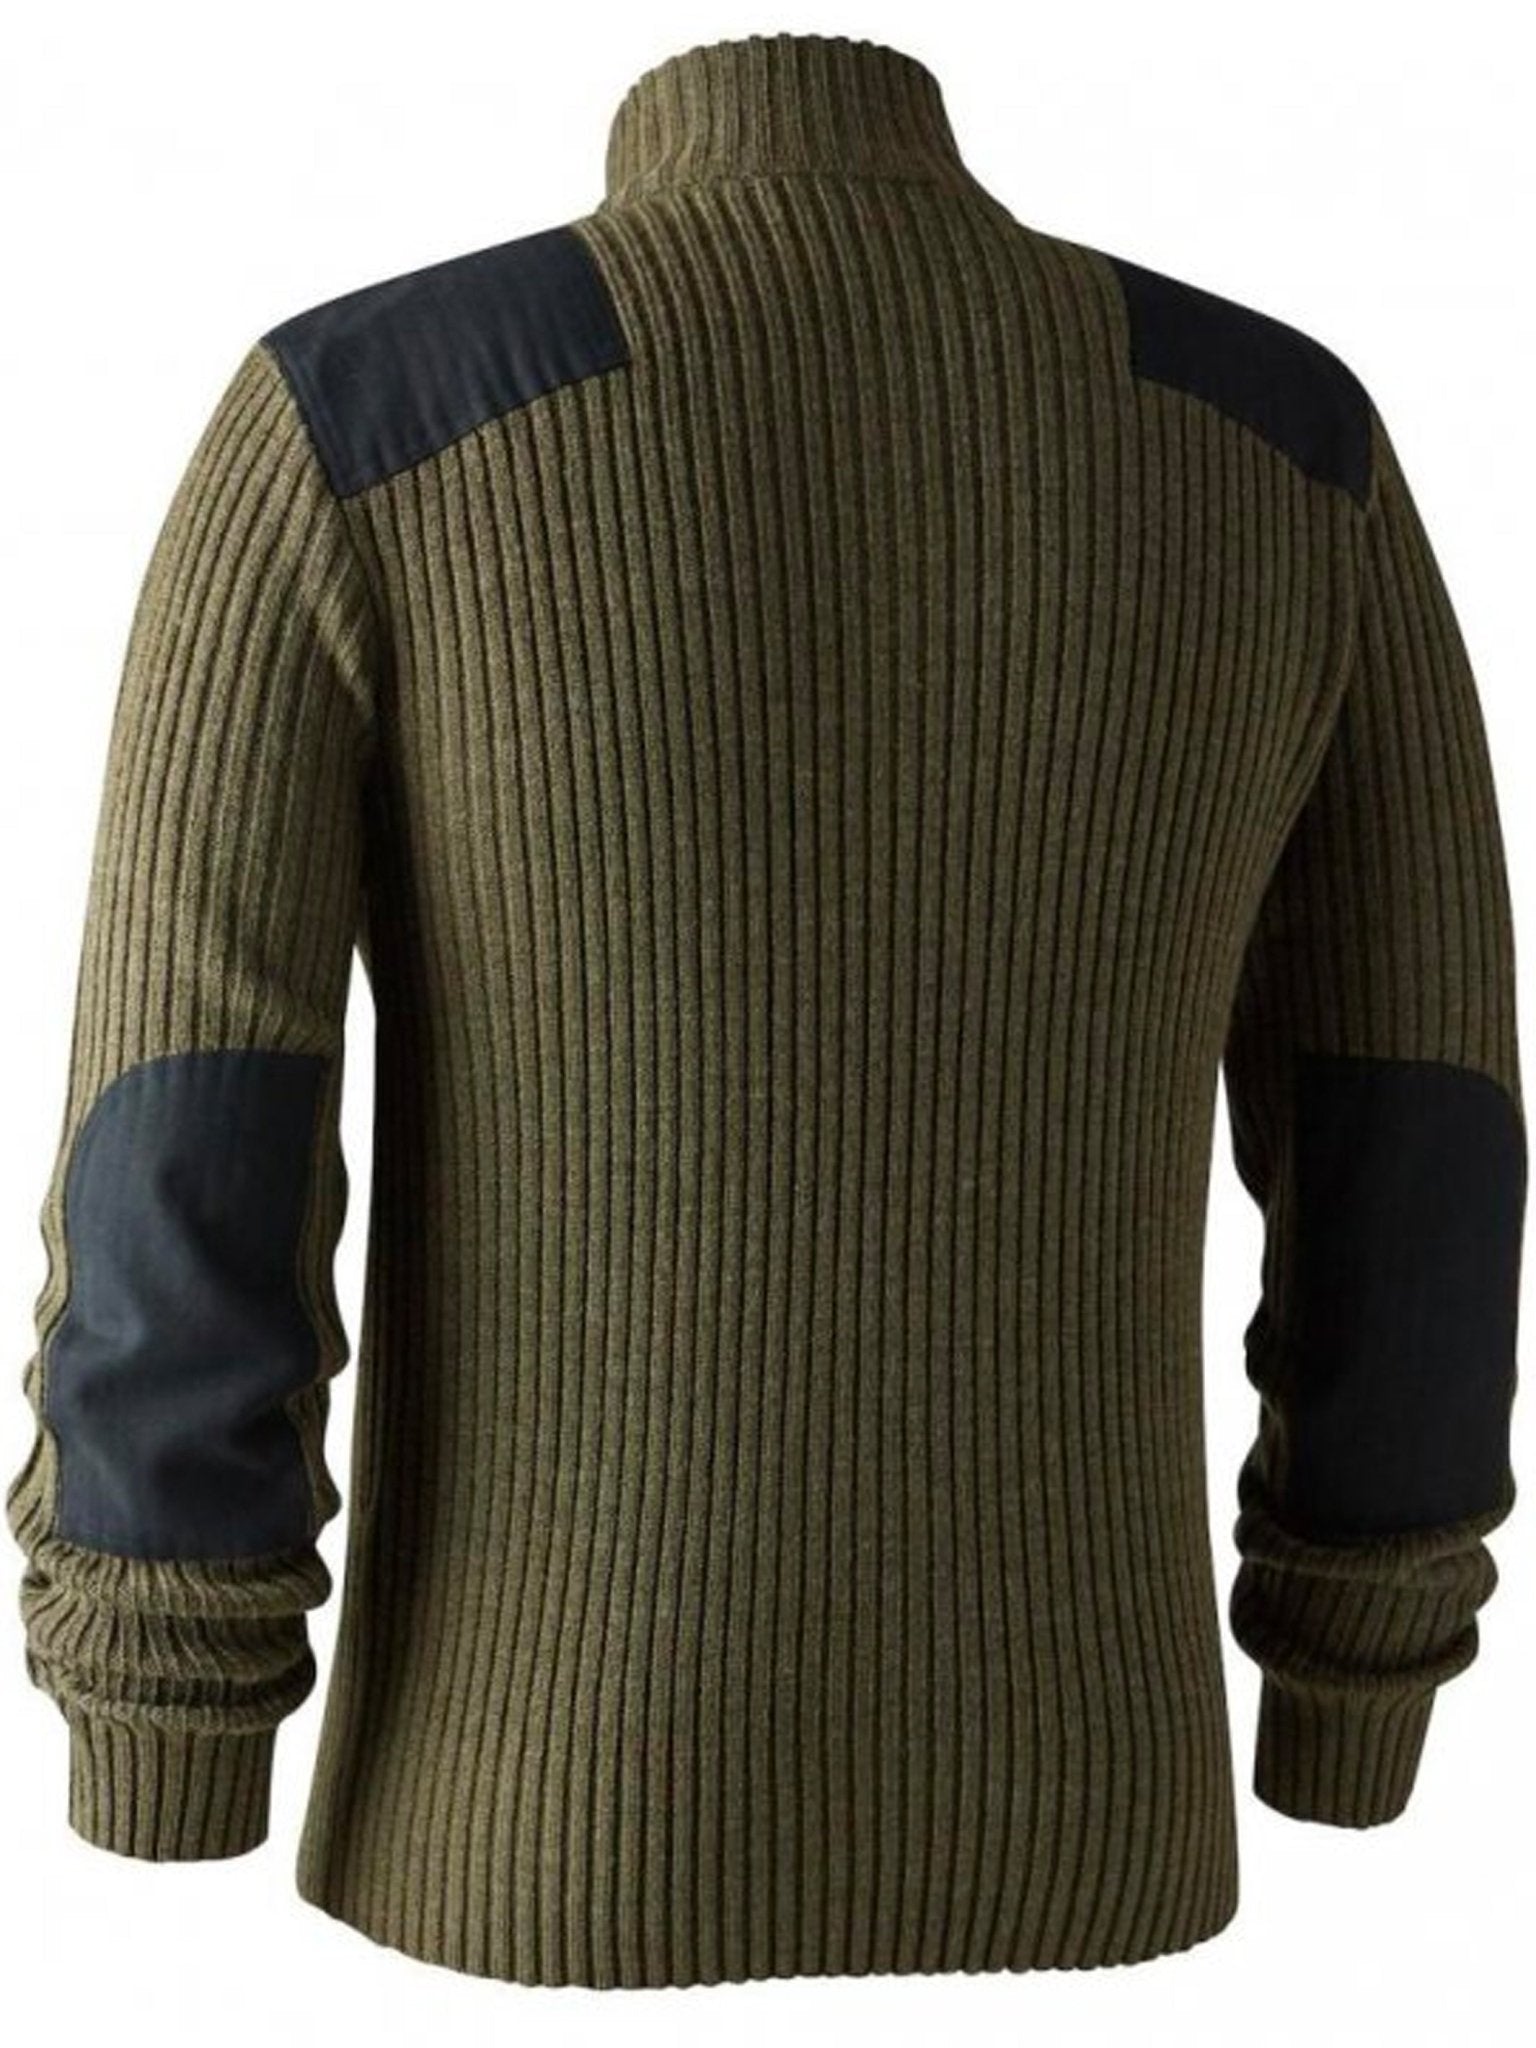 4elementsclothingDeerhunterDeerhunter - Rogaland knit pullover / jumper with quarter ZipKnitwear8726-572-S